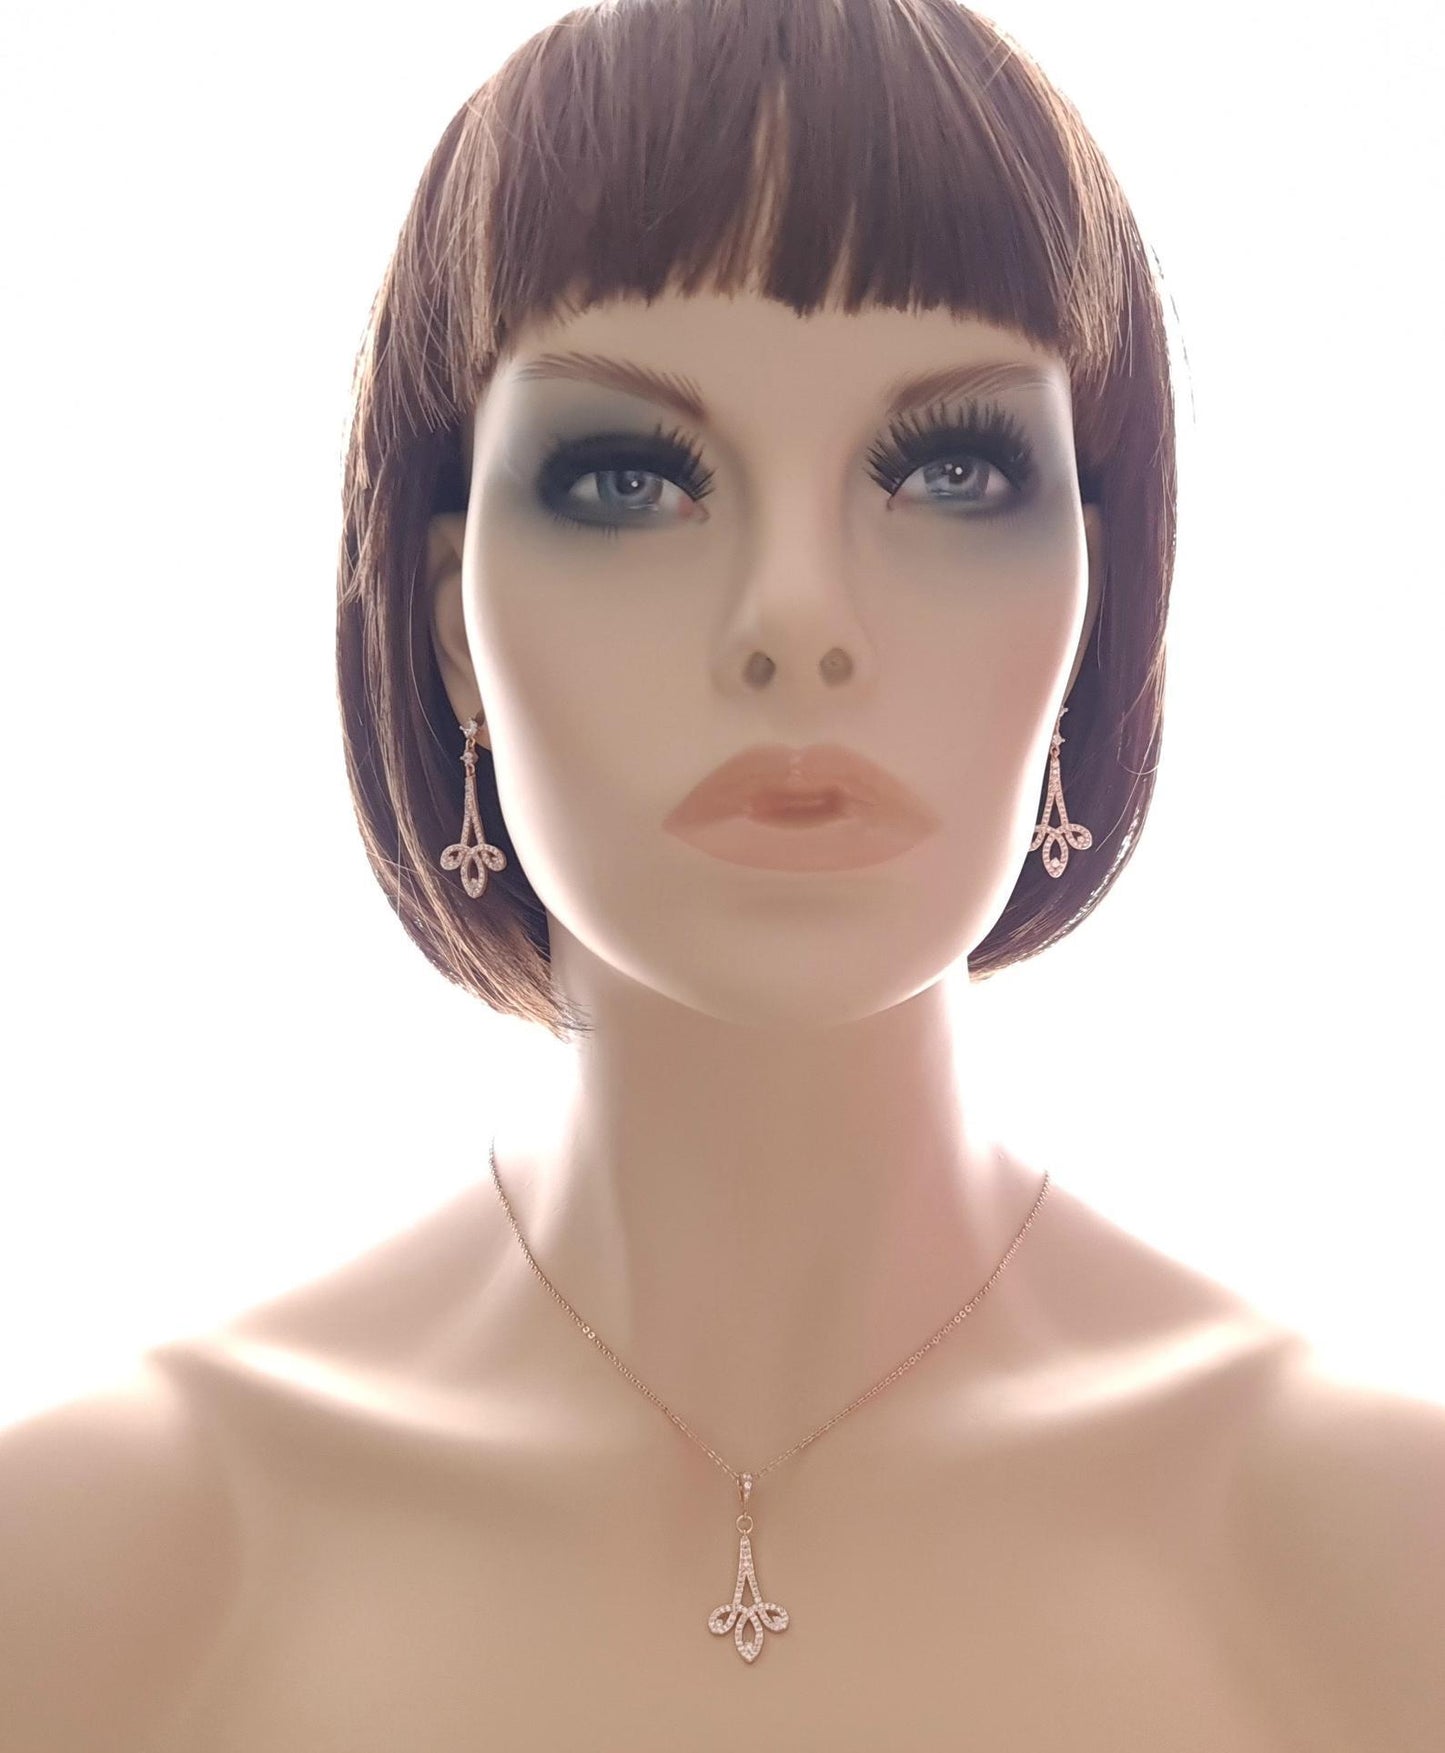 Silver & Cubic Zirconia Drop Earrings- Allison - PoetryDesigns